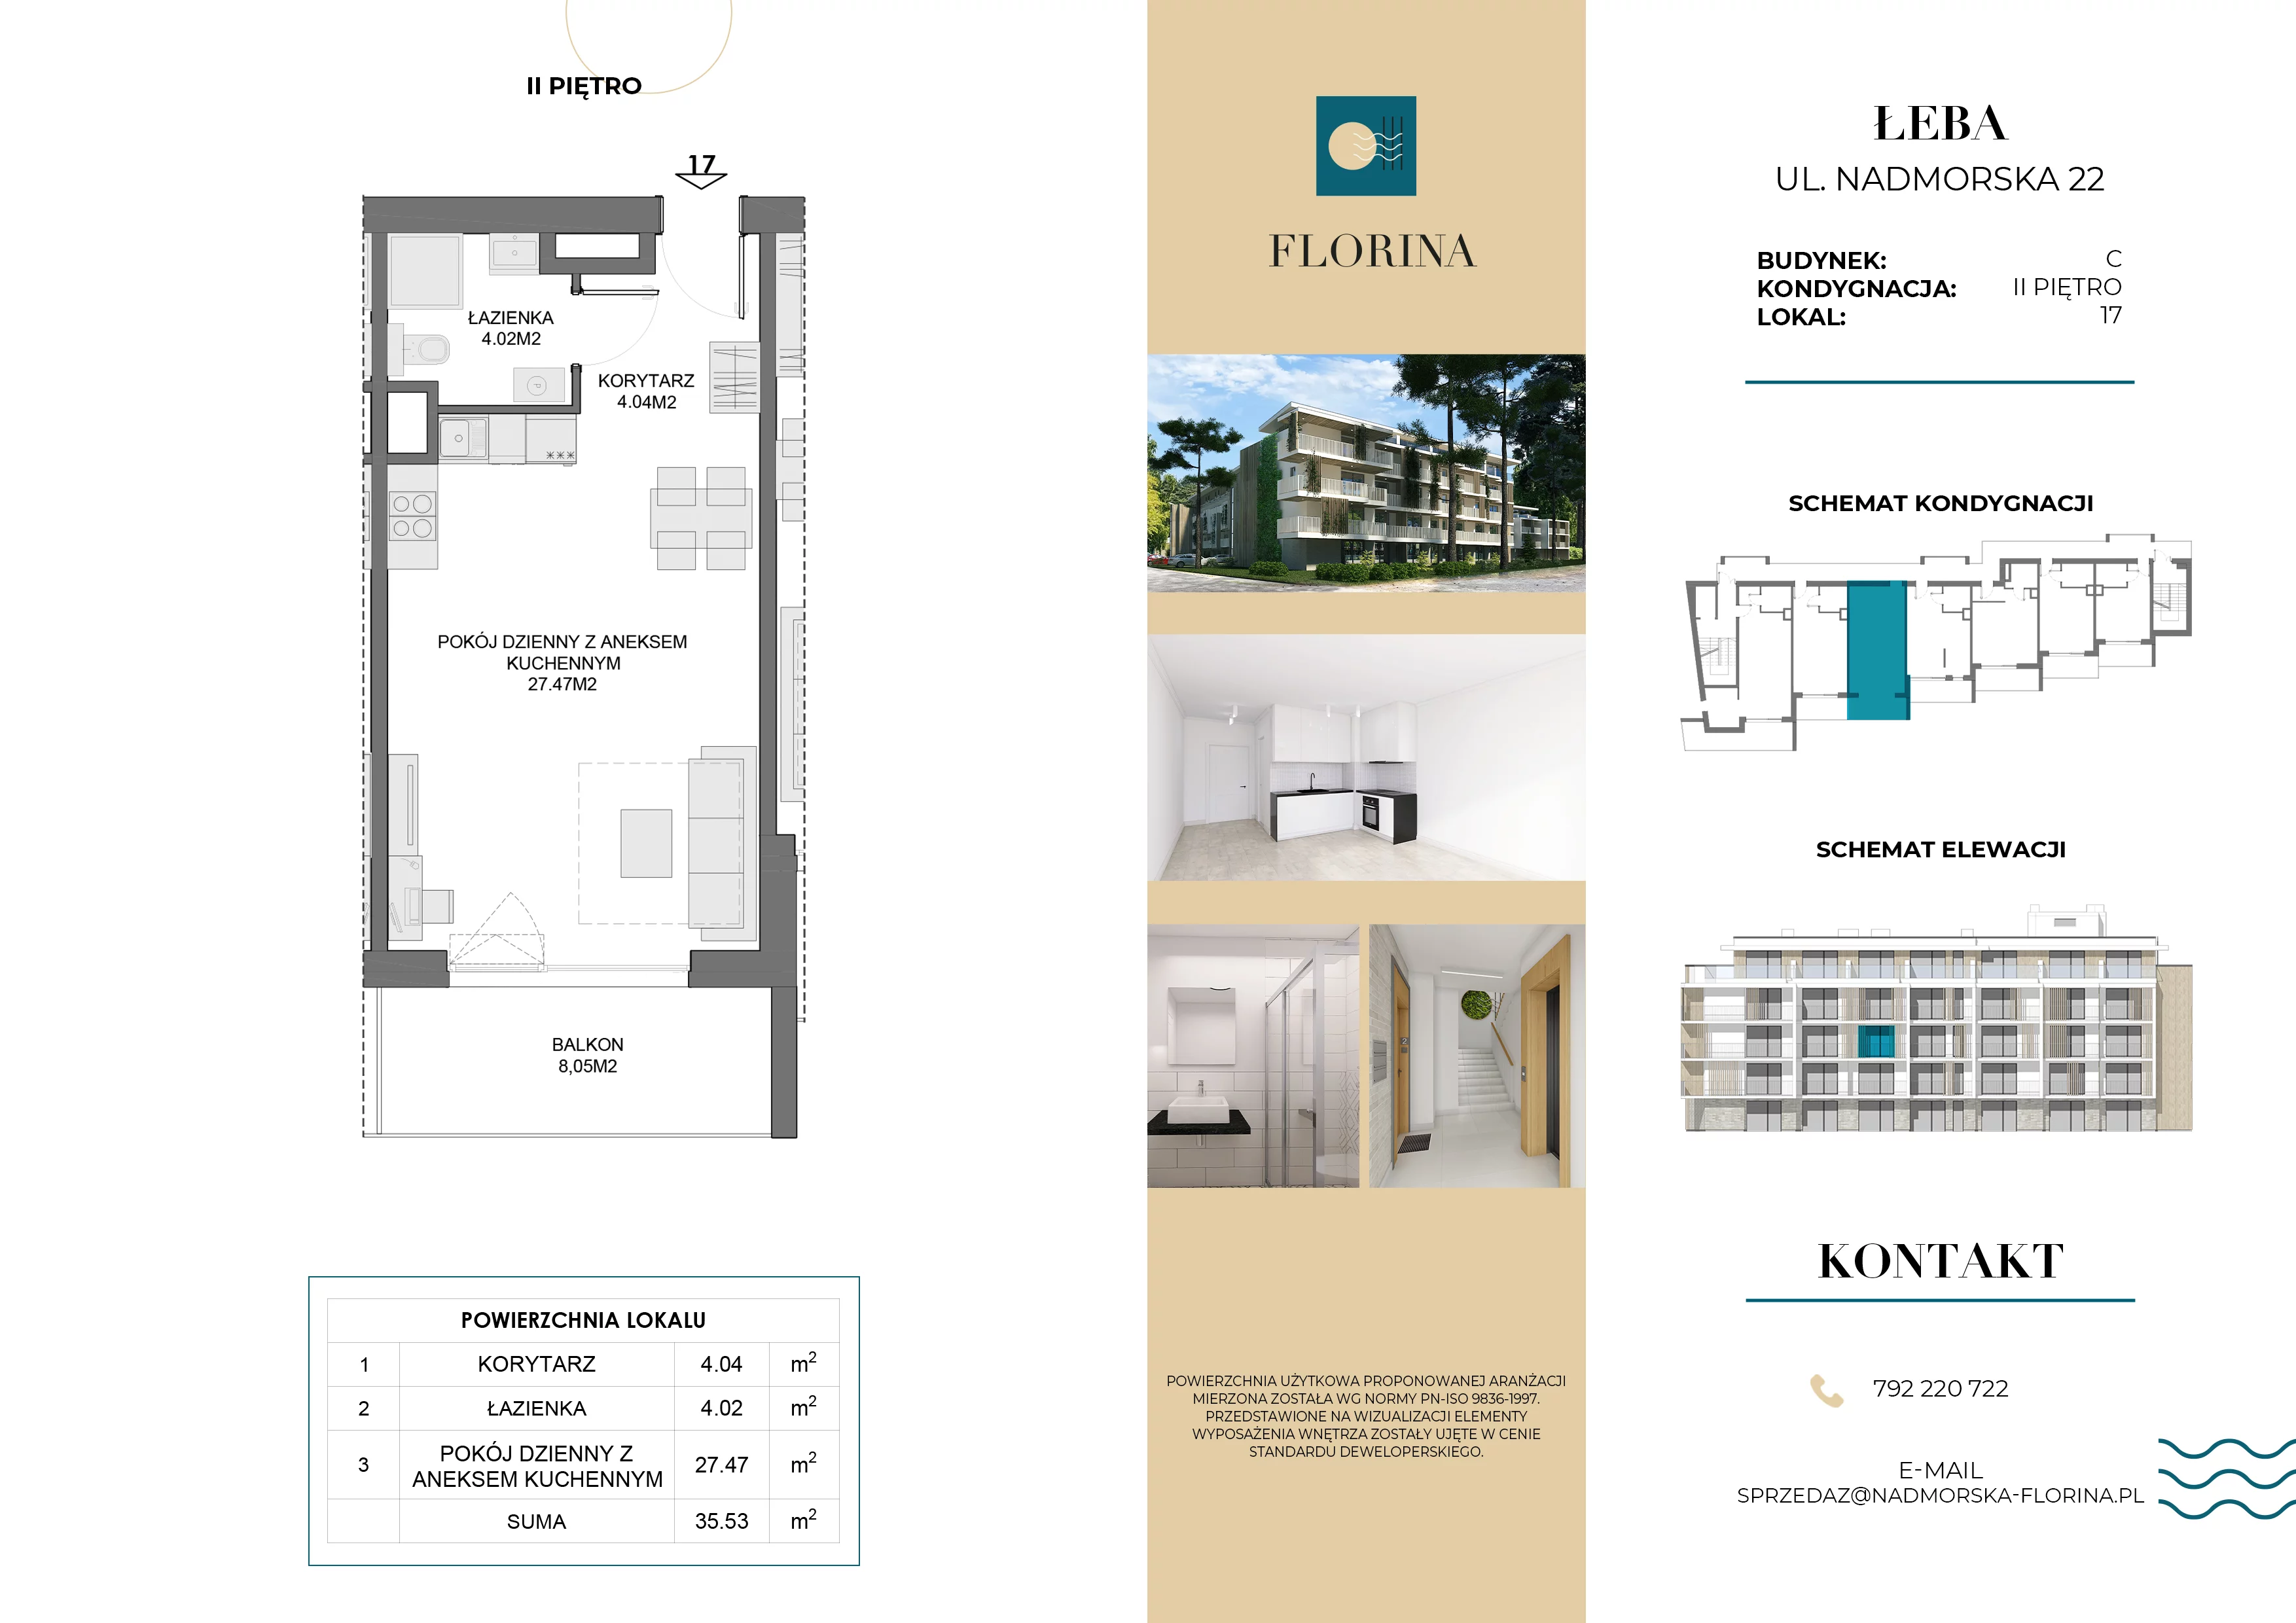 Apartament inwestycyjny 35,53 m², piętro 2, oferta nr C.M17, Nadmorska Florina, Łeba, ul. Nadmorska